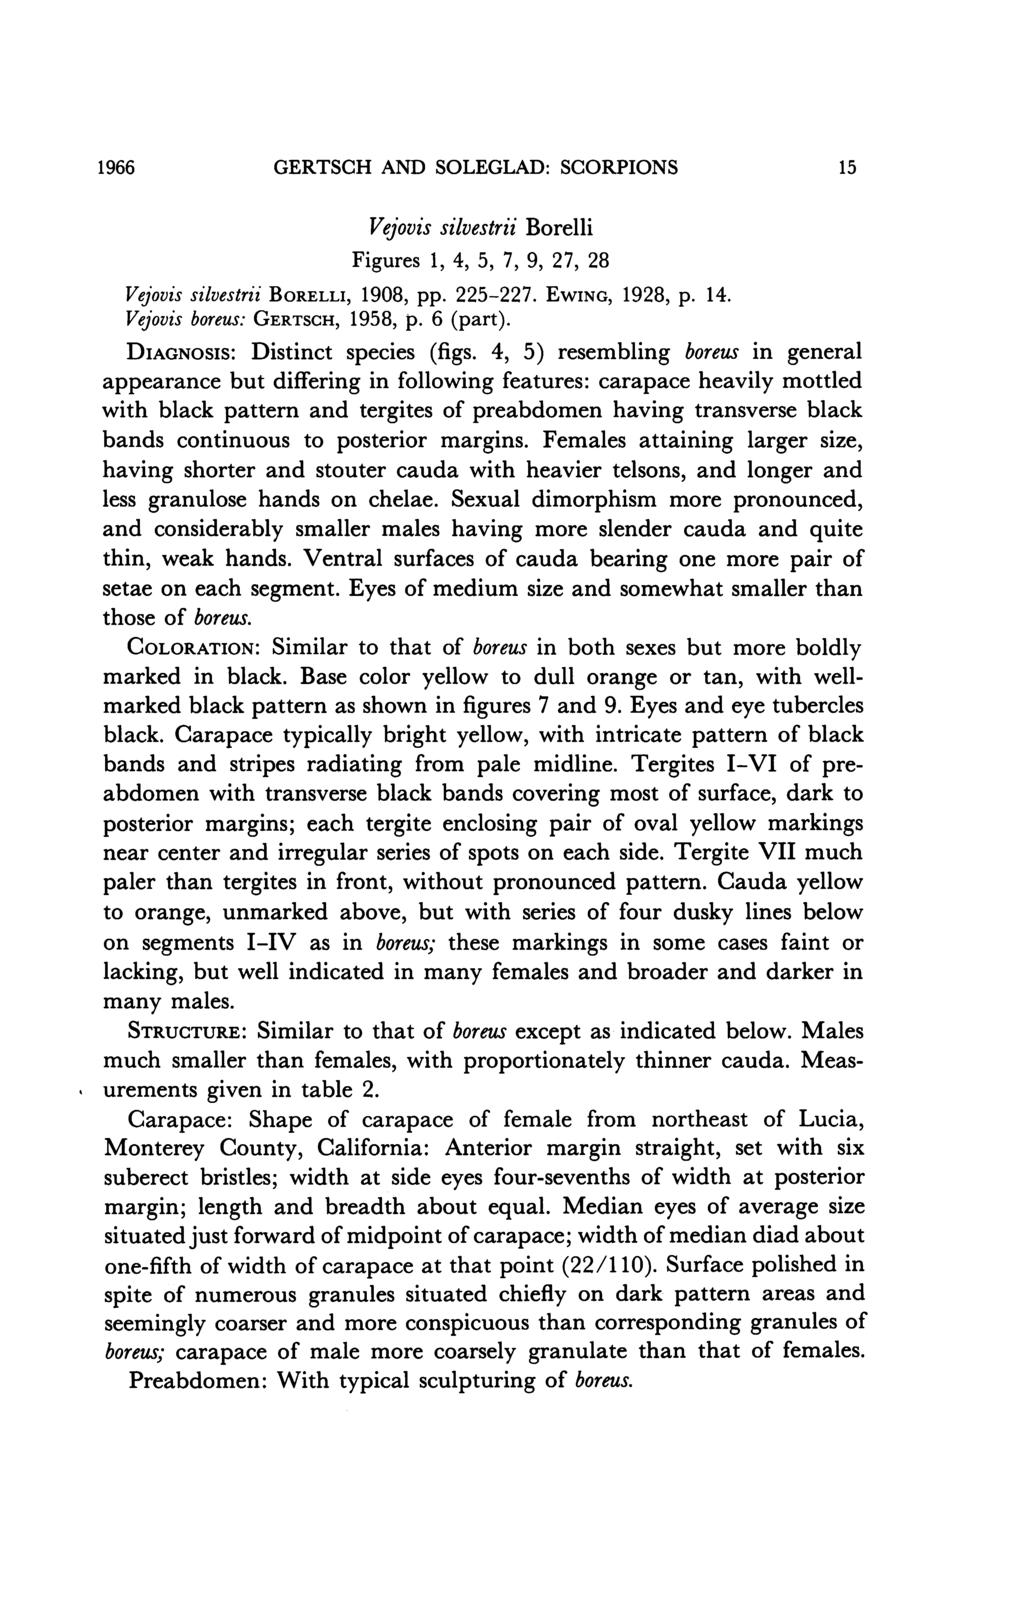 1966 GERTSCH AND SOLEGLAD: SCORPIONS 15 Vejovis silvestrii Borelli Figures 1, 4, 5, 7, 9, 27, 28 Vejovis silvestrii BORELLI, 1908, pp. 225-227. EWING, 1928, p. 14. Vejovis boreus: GERTSCH, 1958, p.